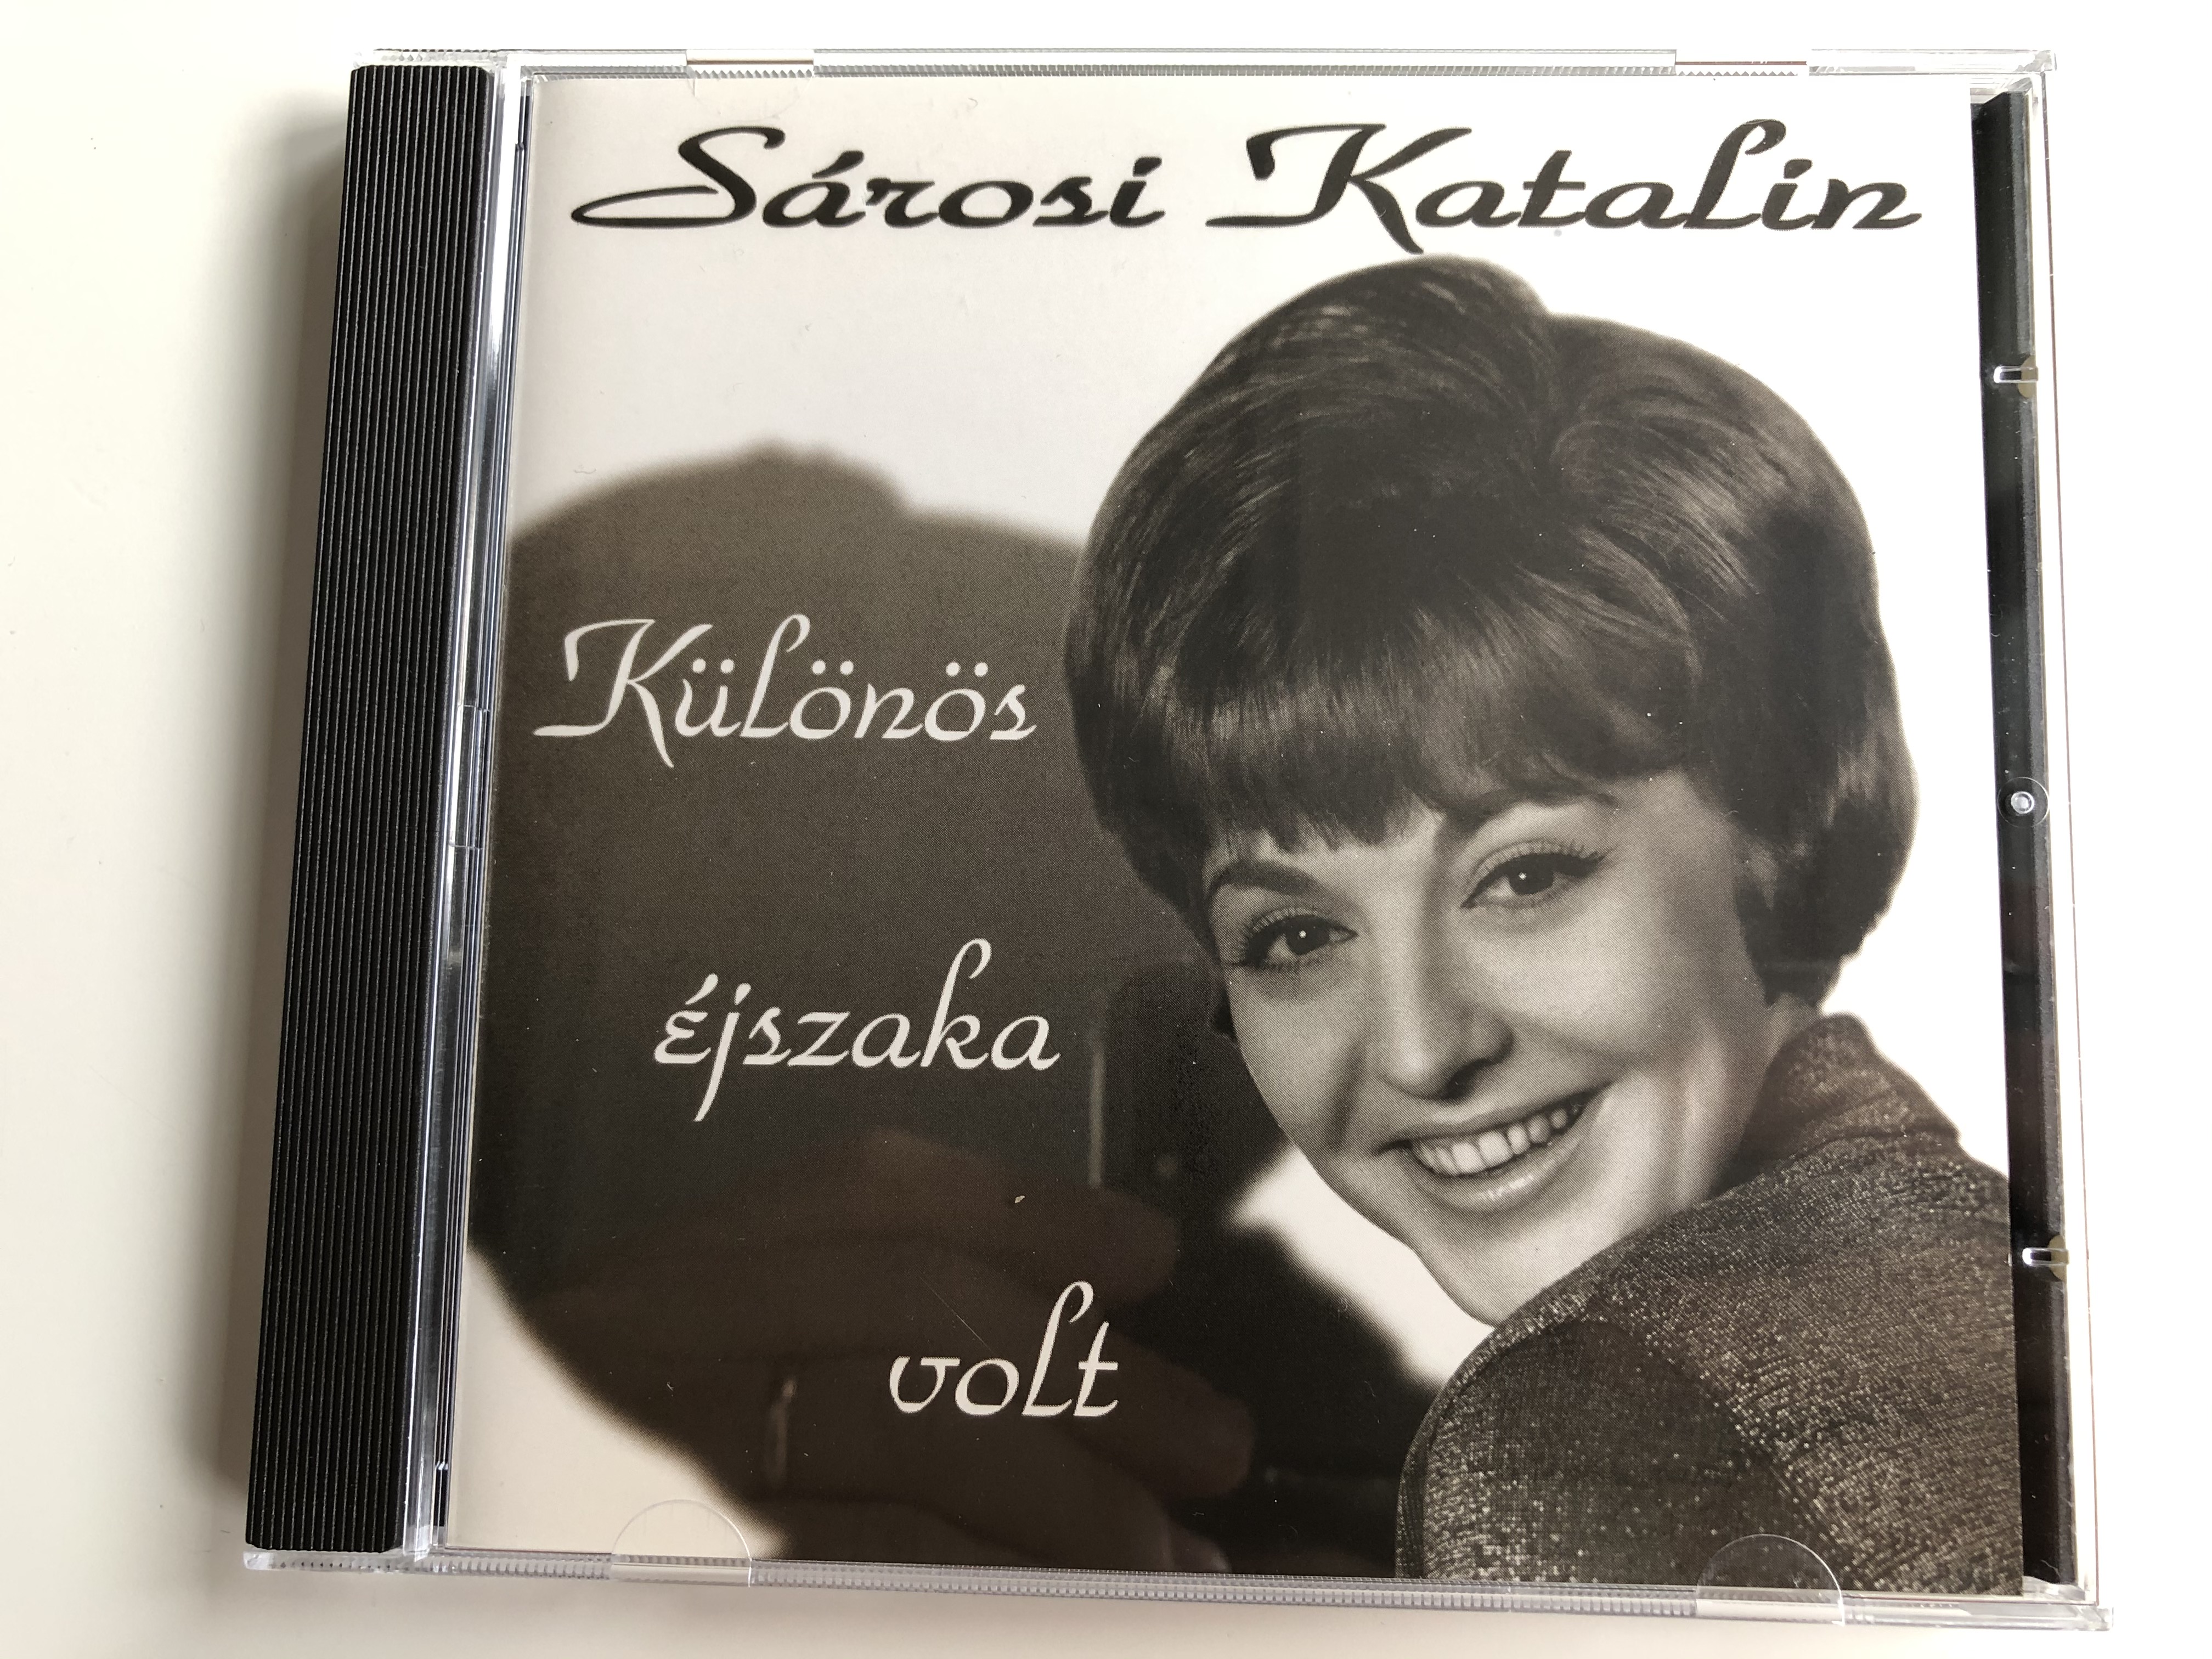 s-rosi-katalin-k-l-n-s-jszaka-volt-premier-art-records-audio-cd-1998-068221-2-1-.jpg